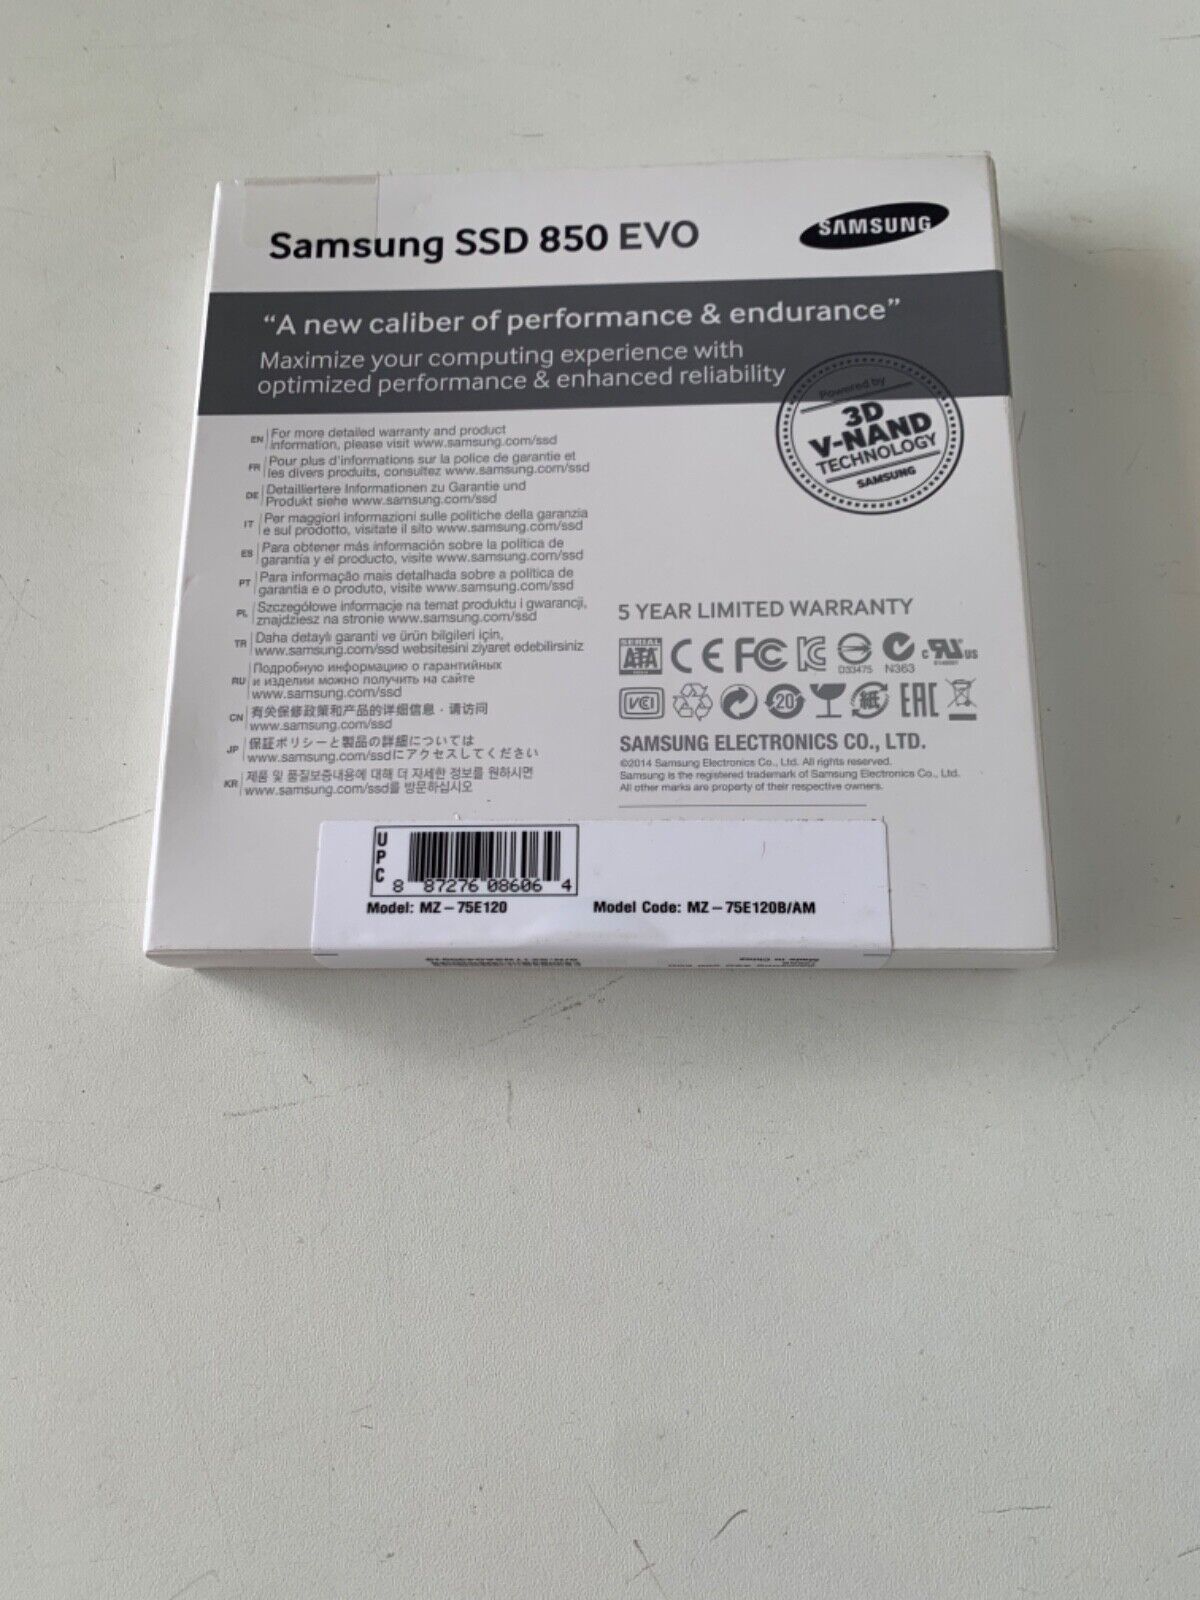 Samsung+850+EVO+120GB+Internal+2.5%22+%28MZ-75E120B%2FAM%29+SSD